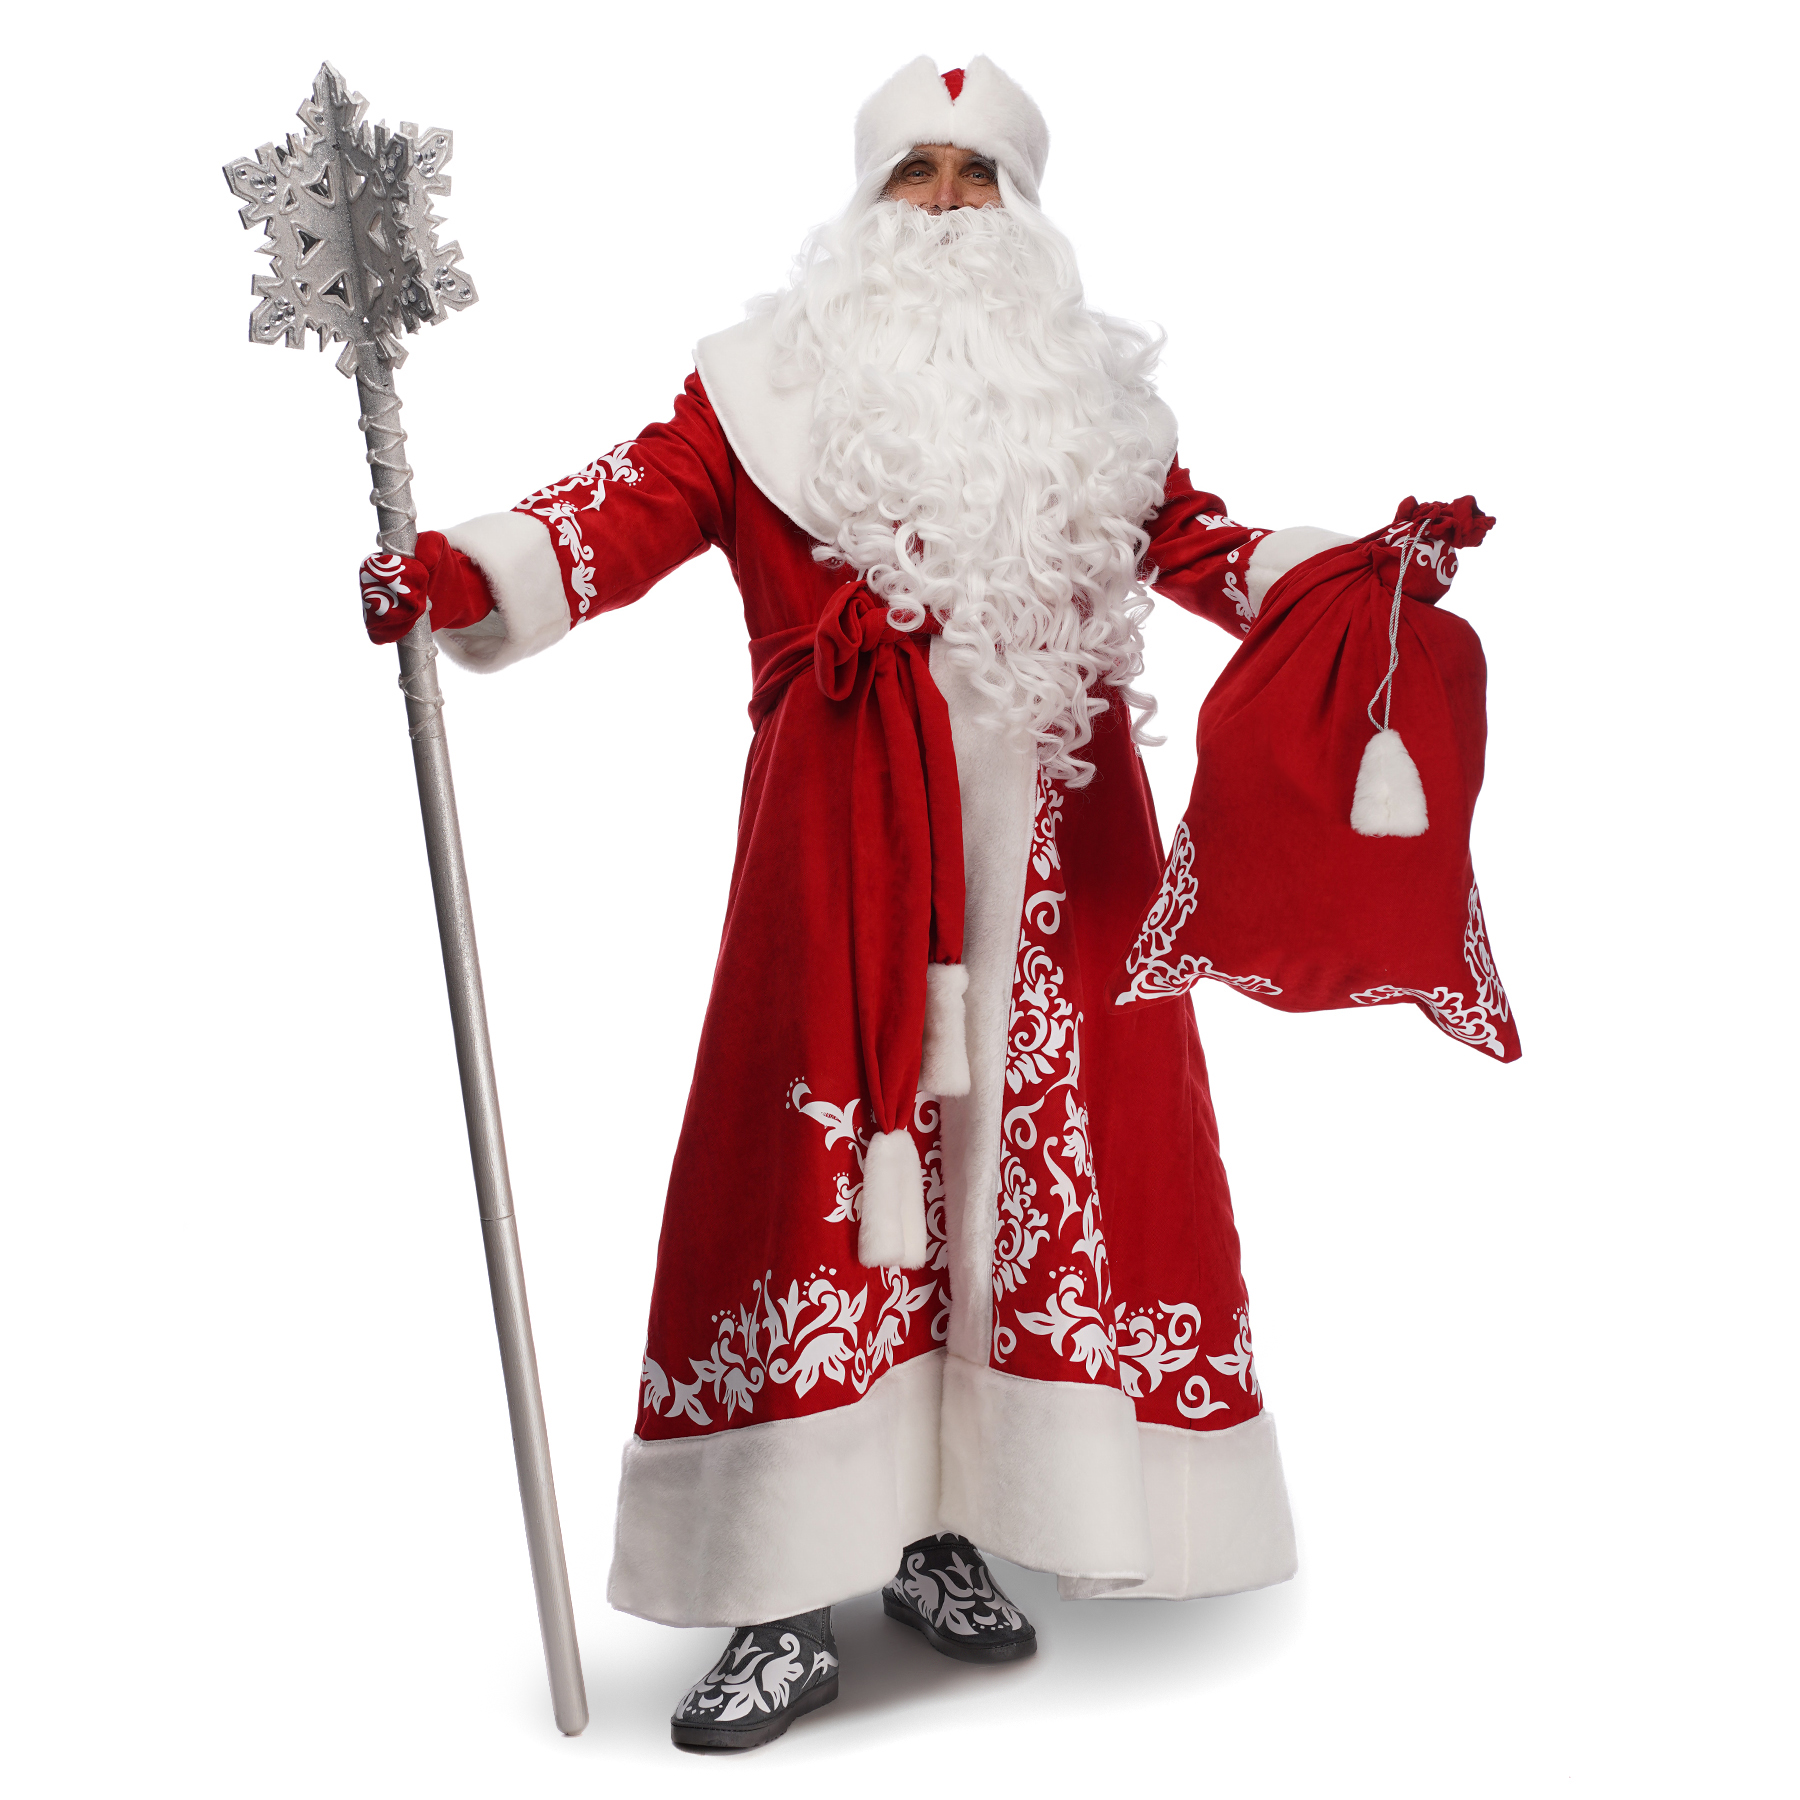 Santa Claus costume Fabulous Red